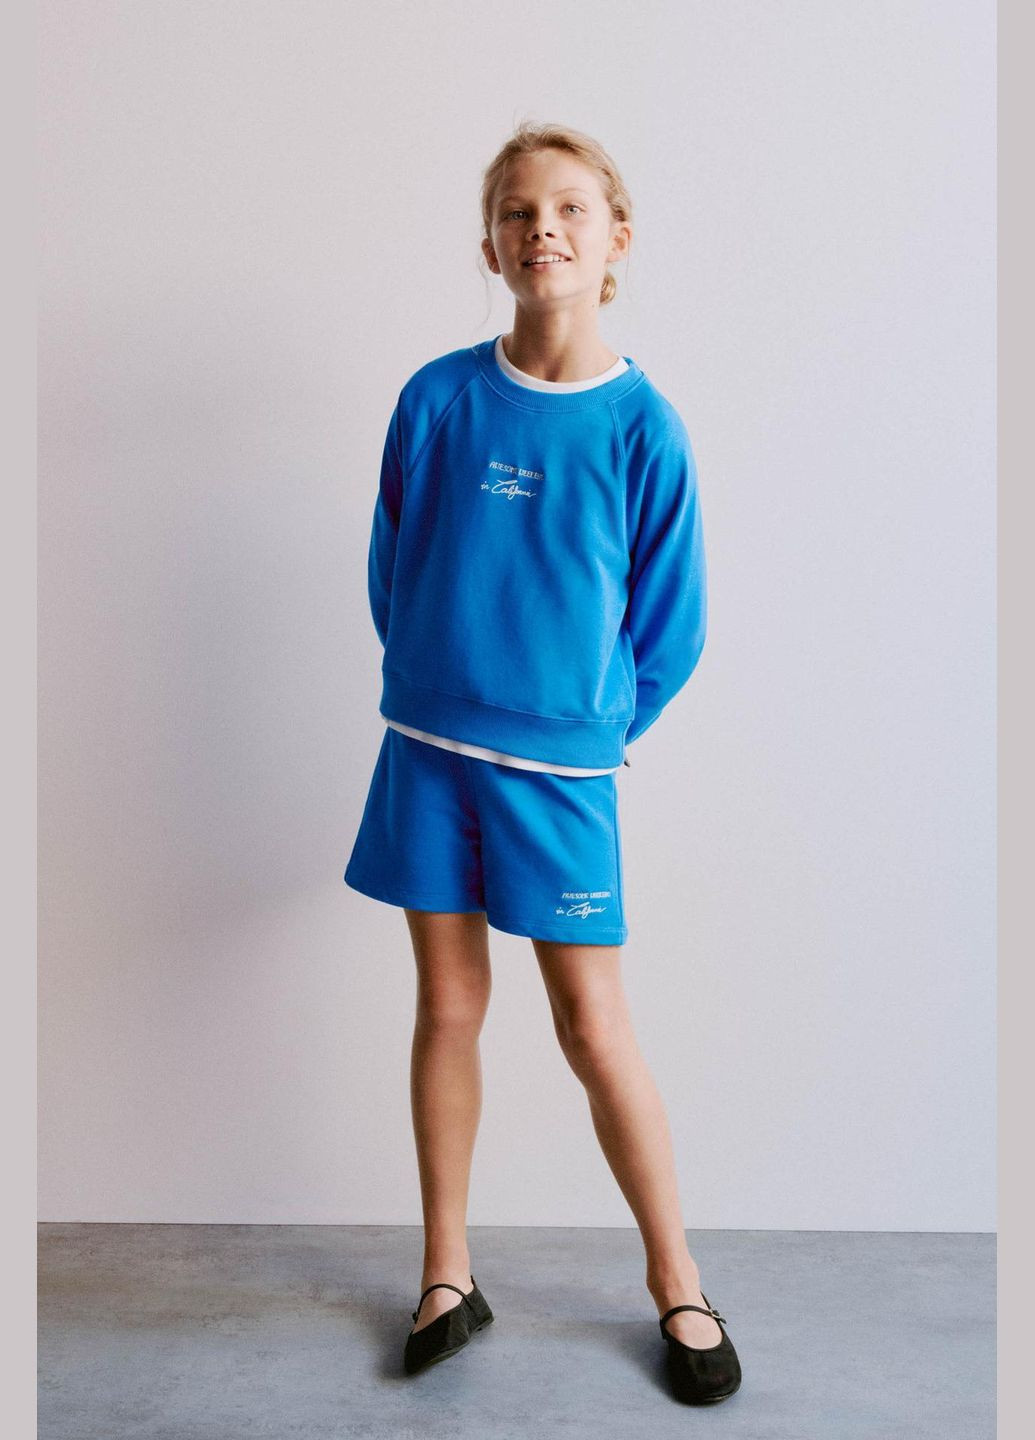 Голубой комплект детский (свитшот + шорты) 9000/667 голубой Zara